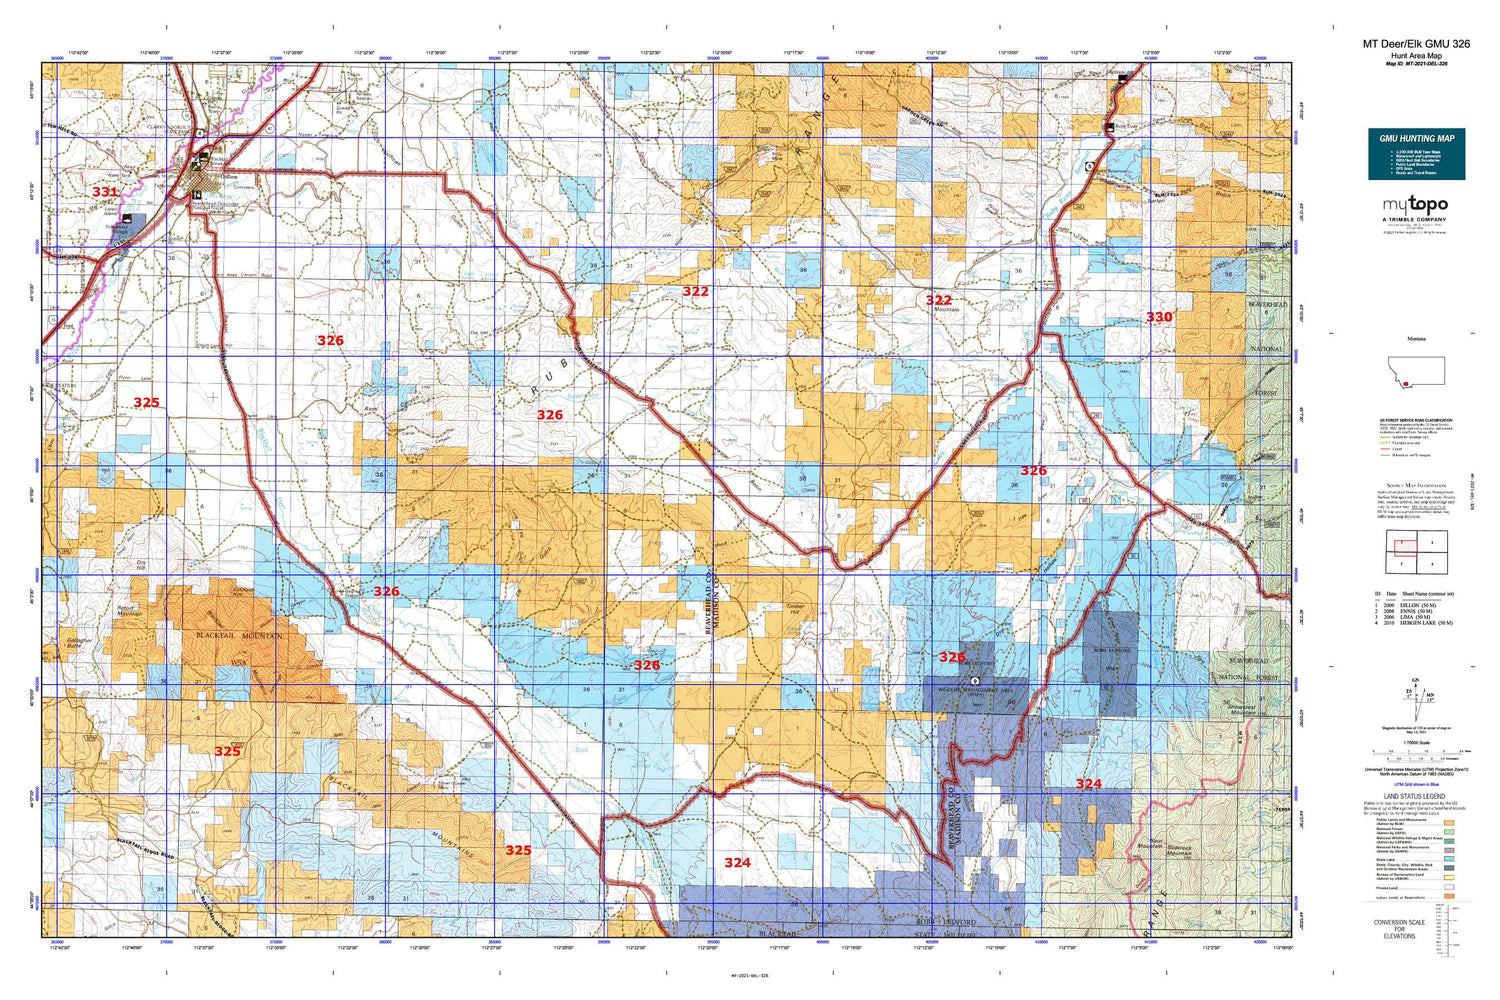 Montana Deer/Elk GMU 326 Map Image